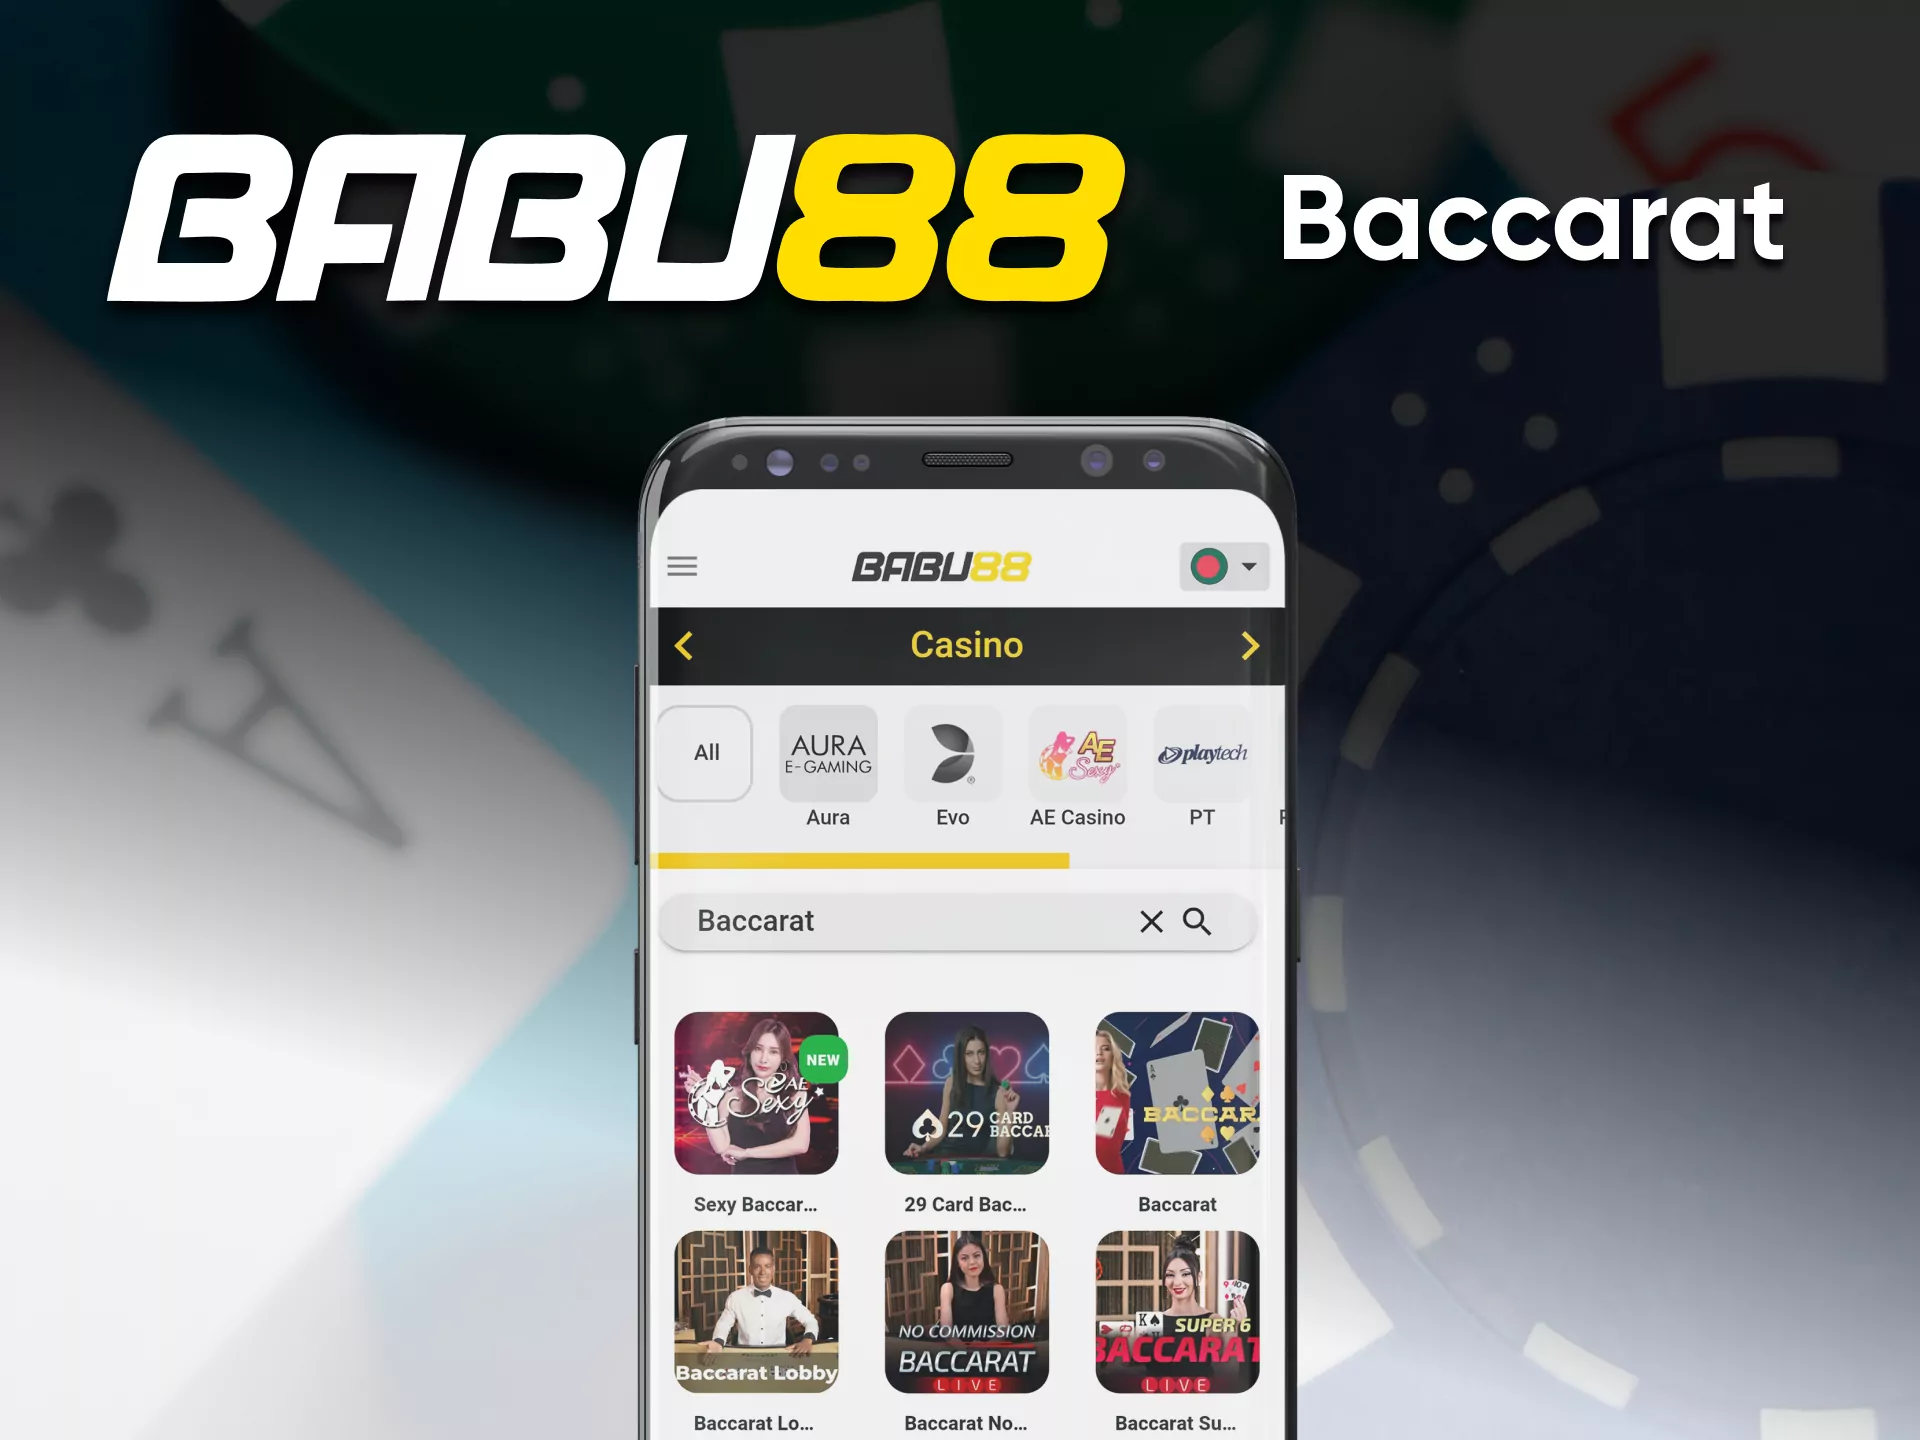 Play Baccarat through the Babu88 app.